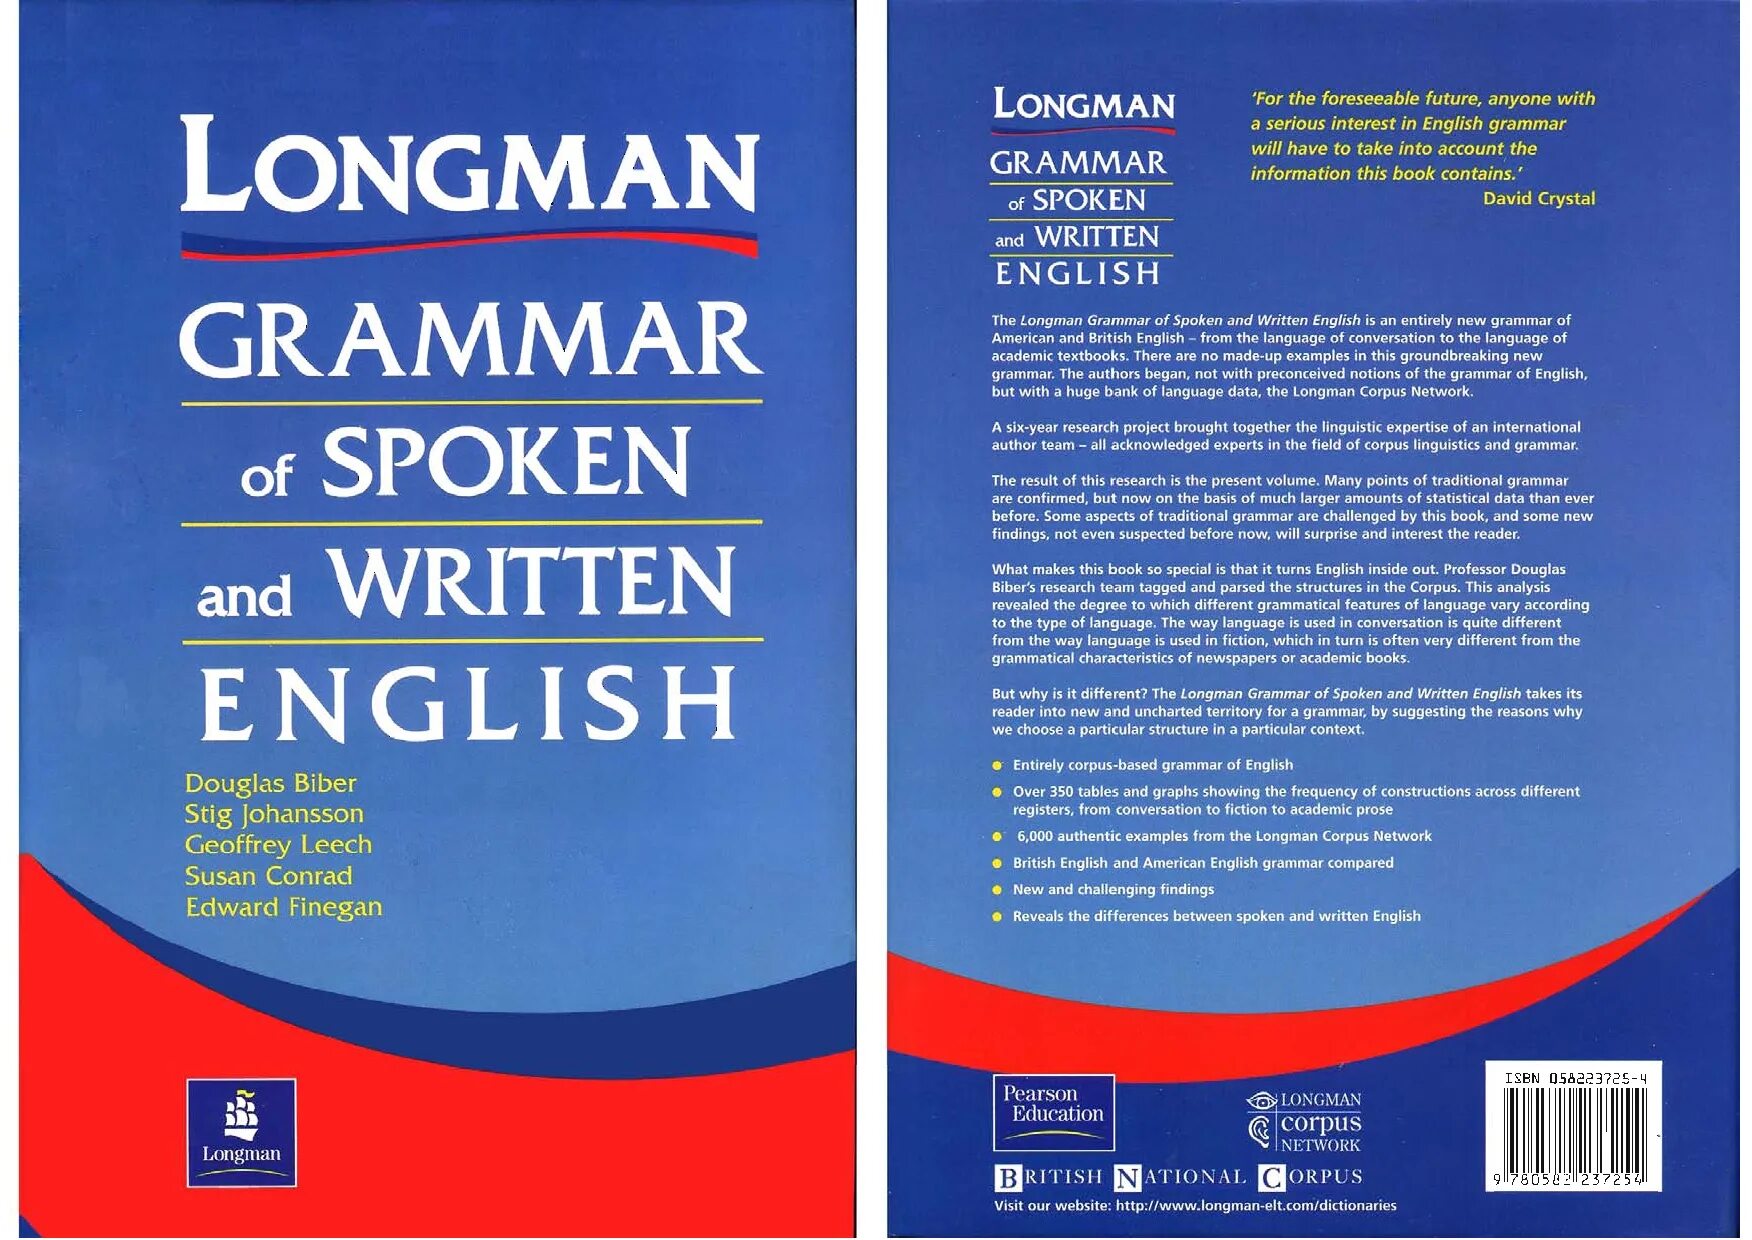 Spoken language перевод. Longman English Grammar. Longman Grammar of spoken and written English книга. Английские учебники Лонгман. Самоучитель английского Longman.